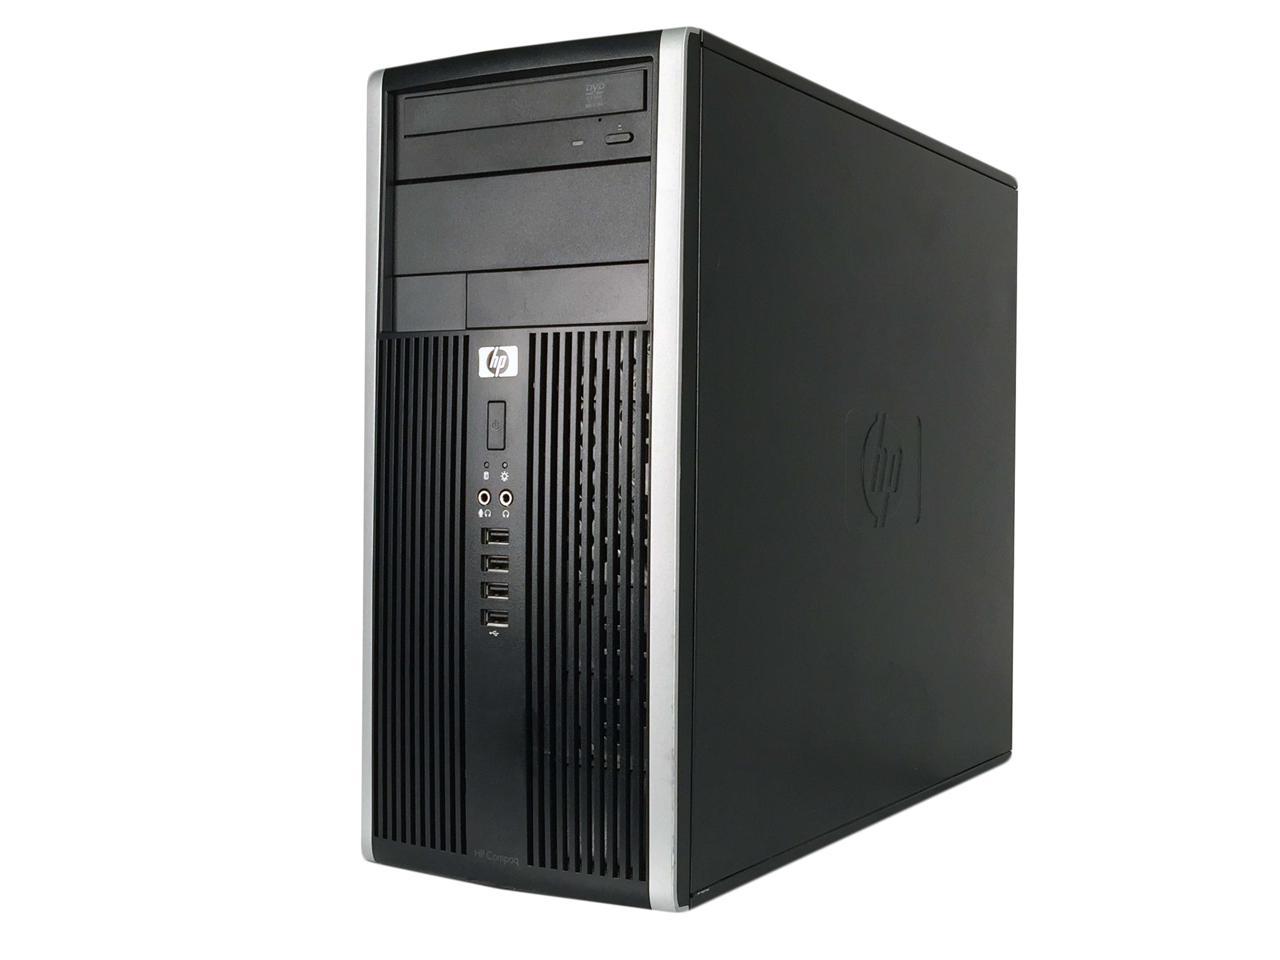 HP Compaq 8200 Elite Tower Intel Core i5 2400 3.10 GHz, 8 GB DDR3, Brand New 360 GB SSD, DVD, WiFi, BT 4.0, DP Adapter,Windows 10 Pro 64-Bit, 1 Year Warranty